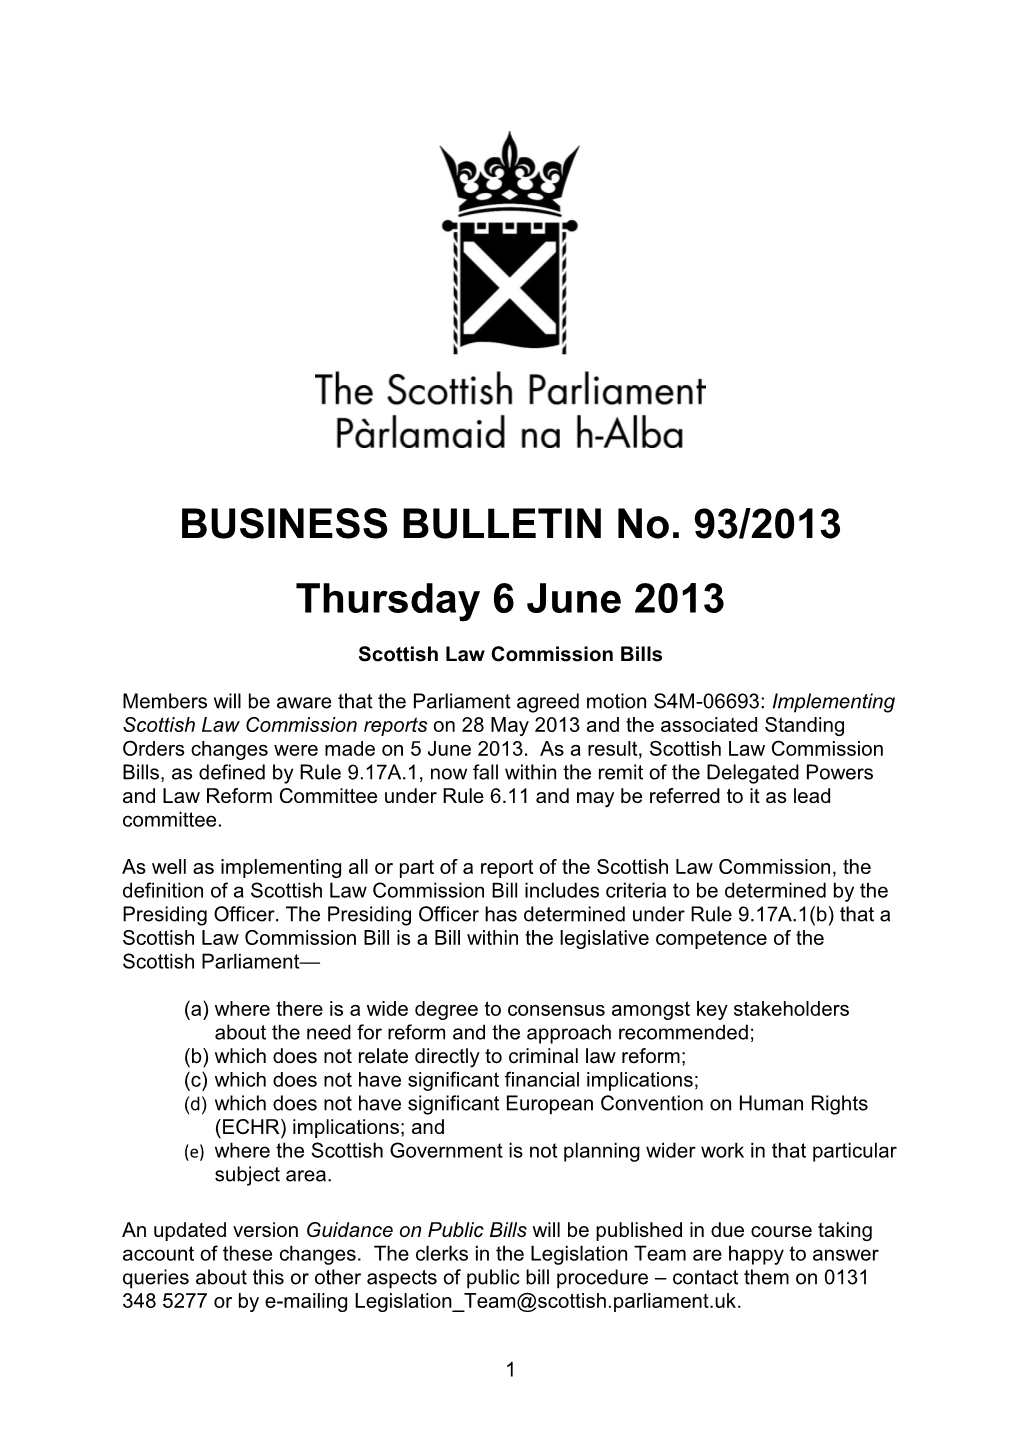 BUSINESS BULLETIN No. 93/2013 Thursday 6 June 2013